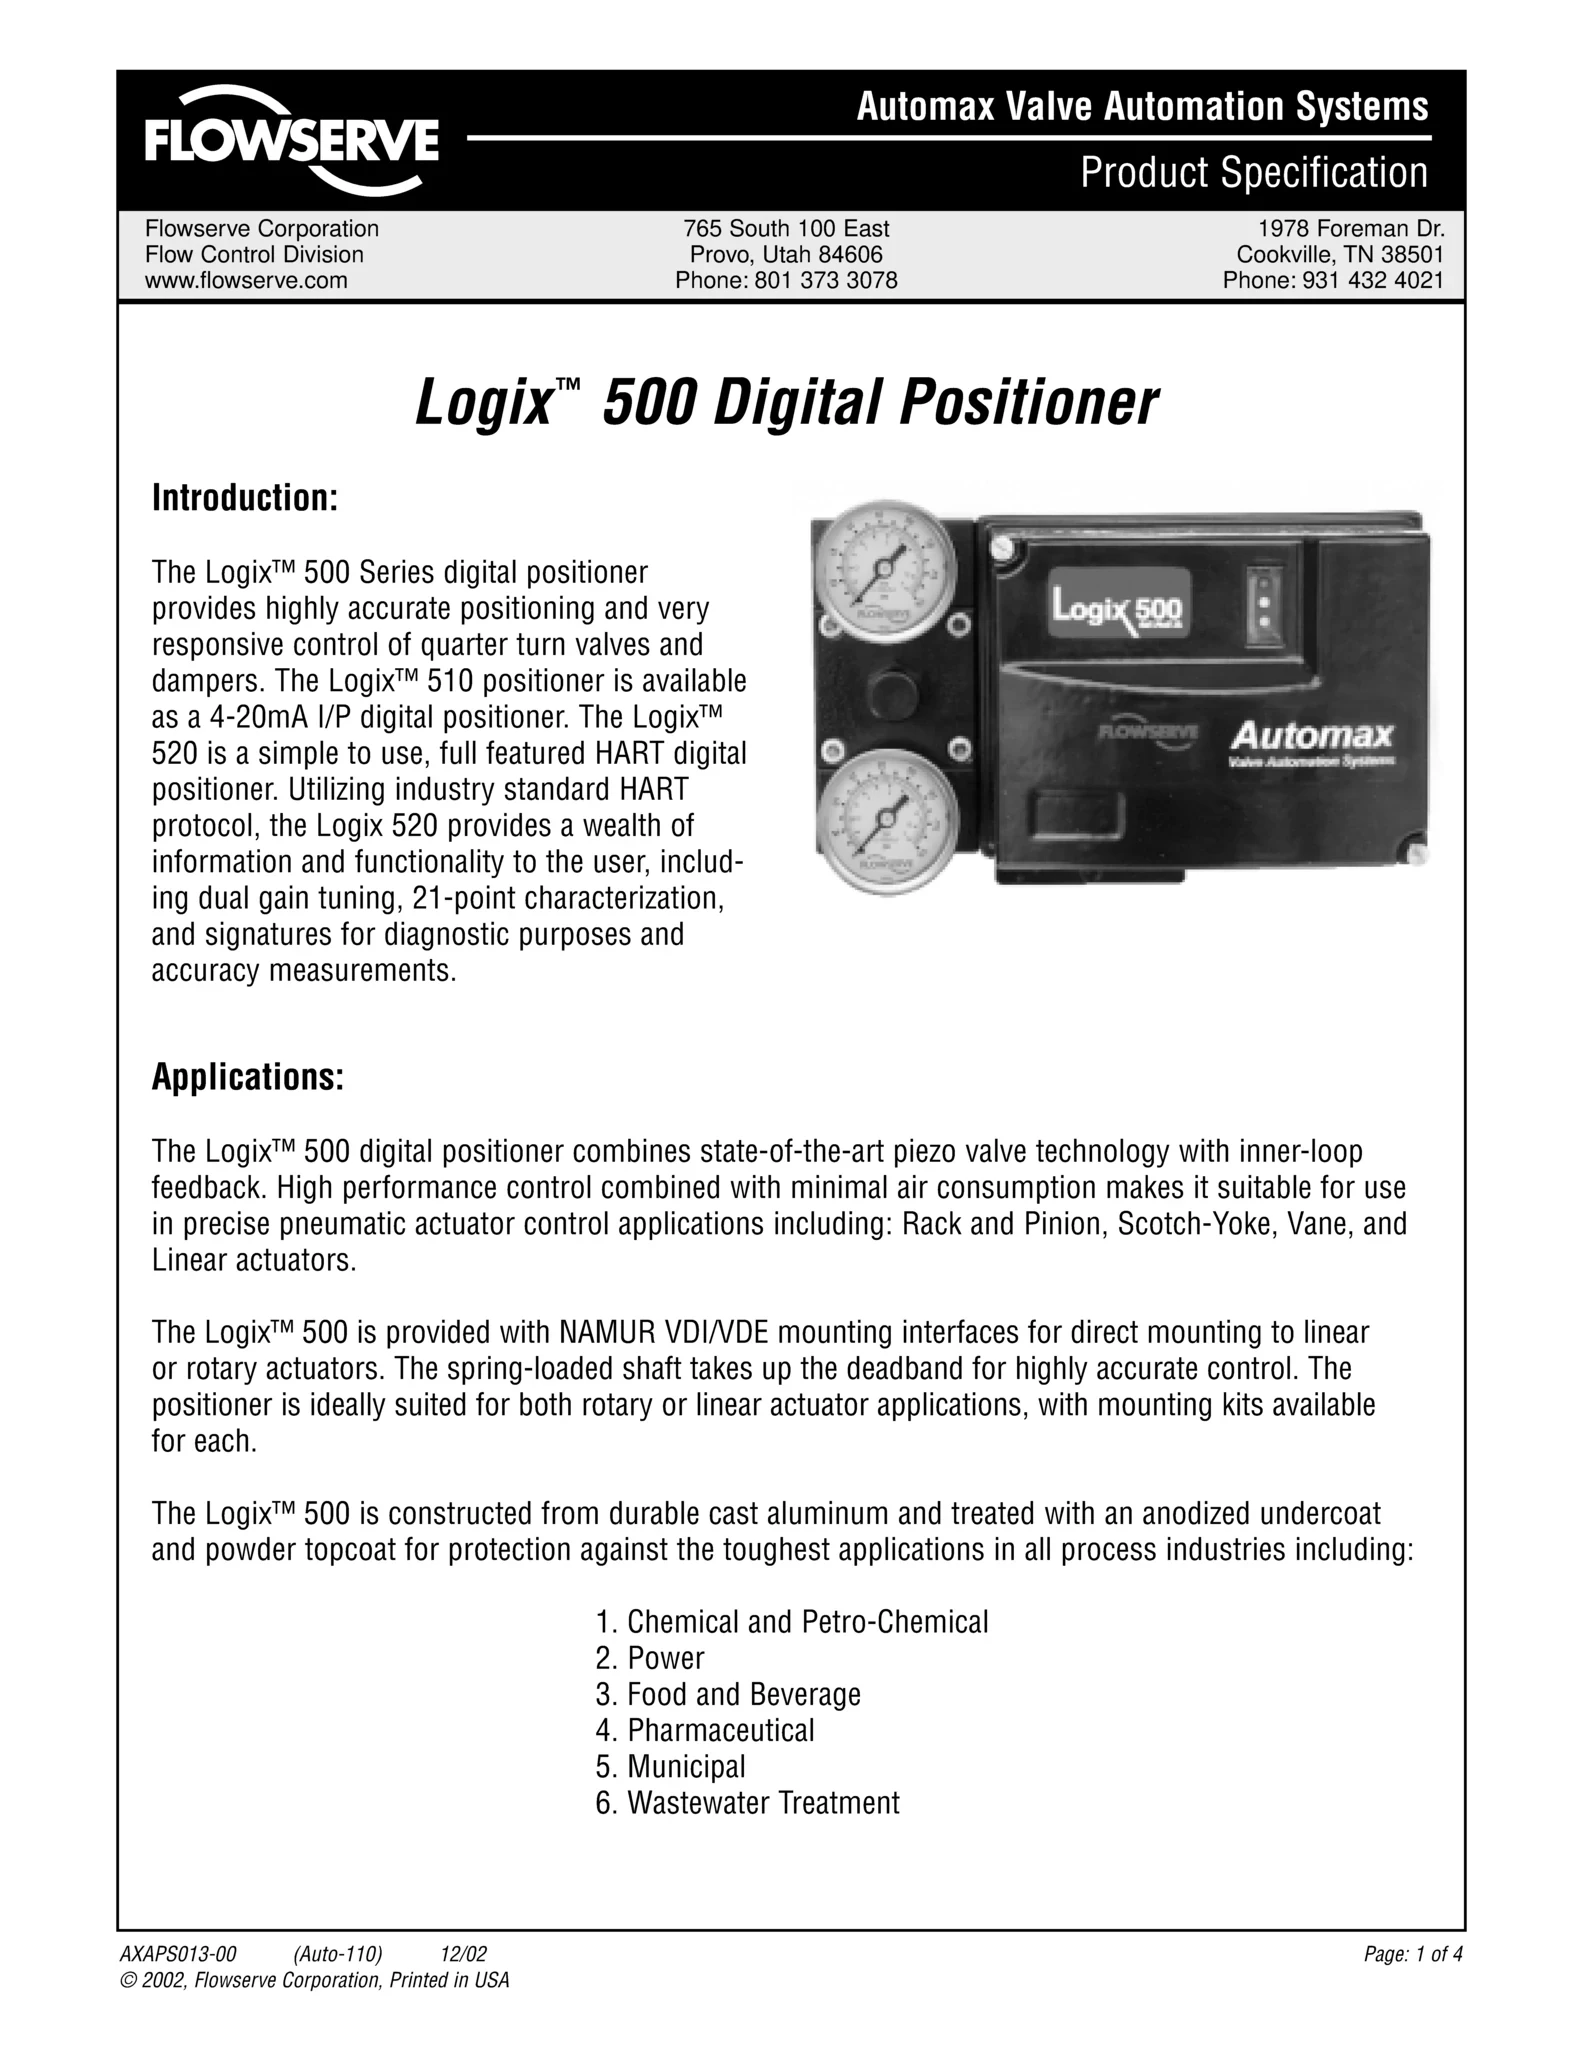 Automax Logix 500si数字定位器产品规格